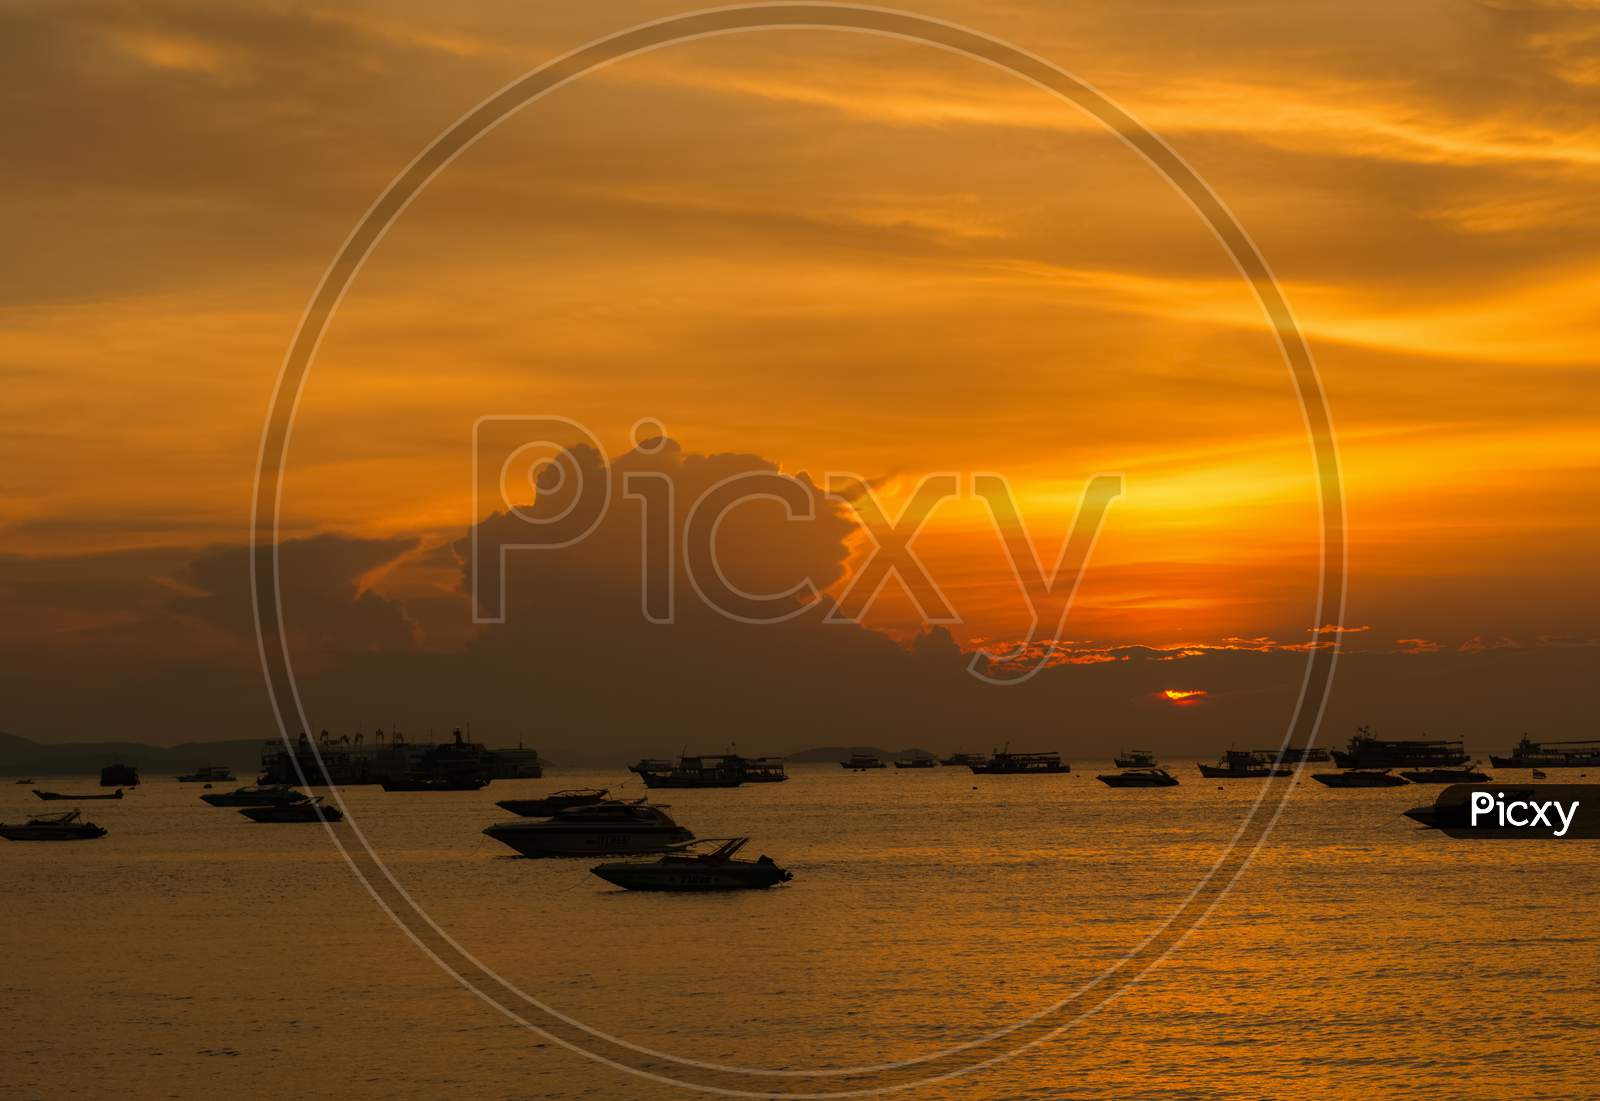 A Colorful Sundown In Thailand